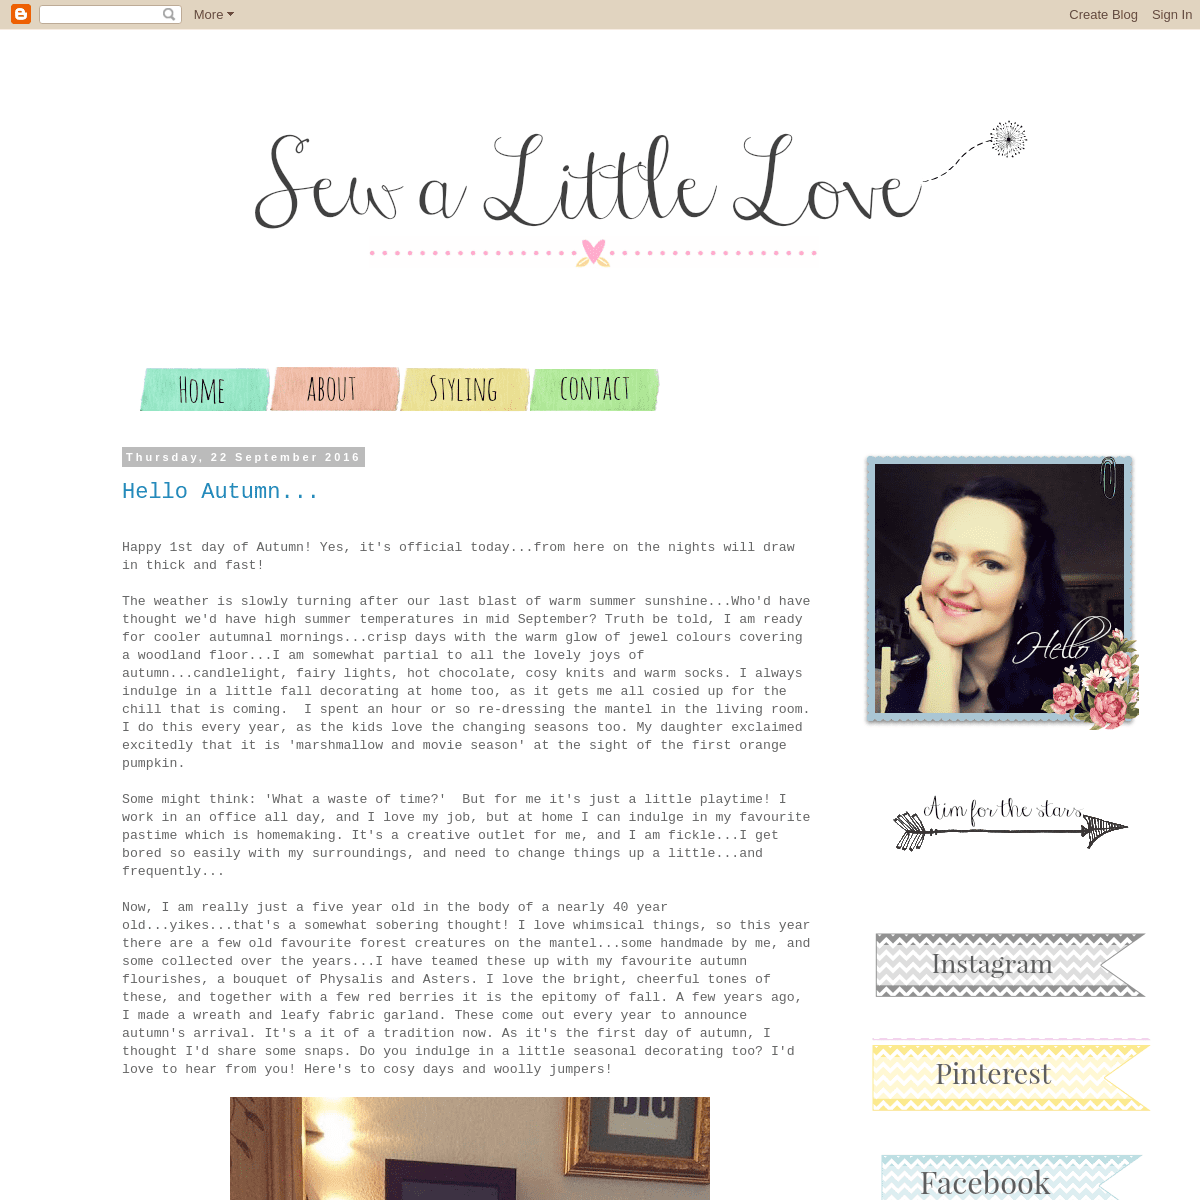 A complete backup of sewalittlelove.blogspot.com